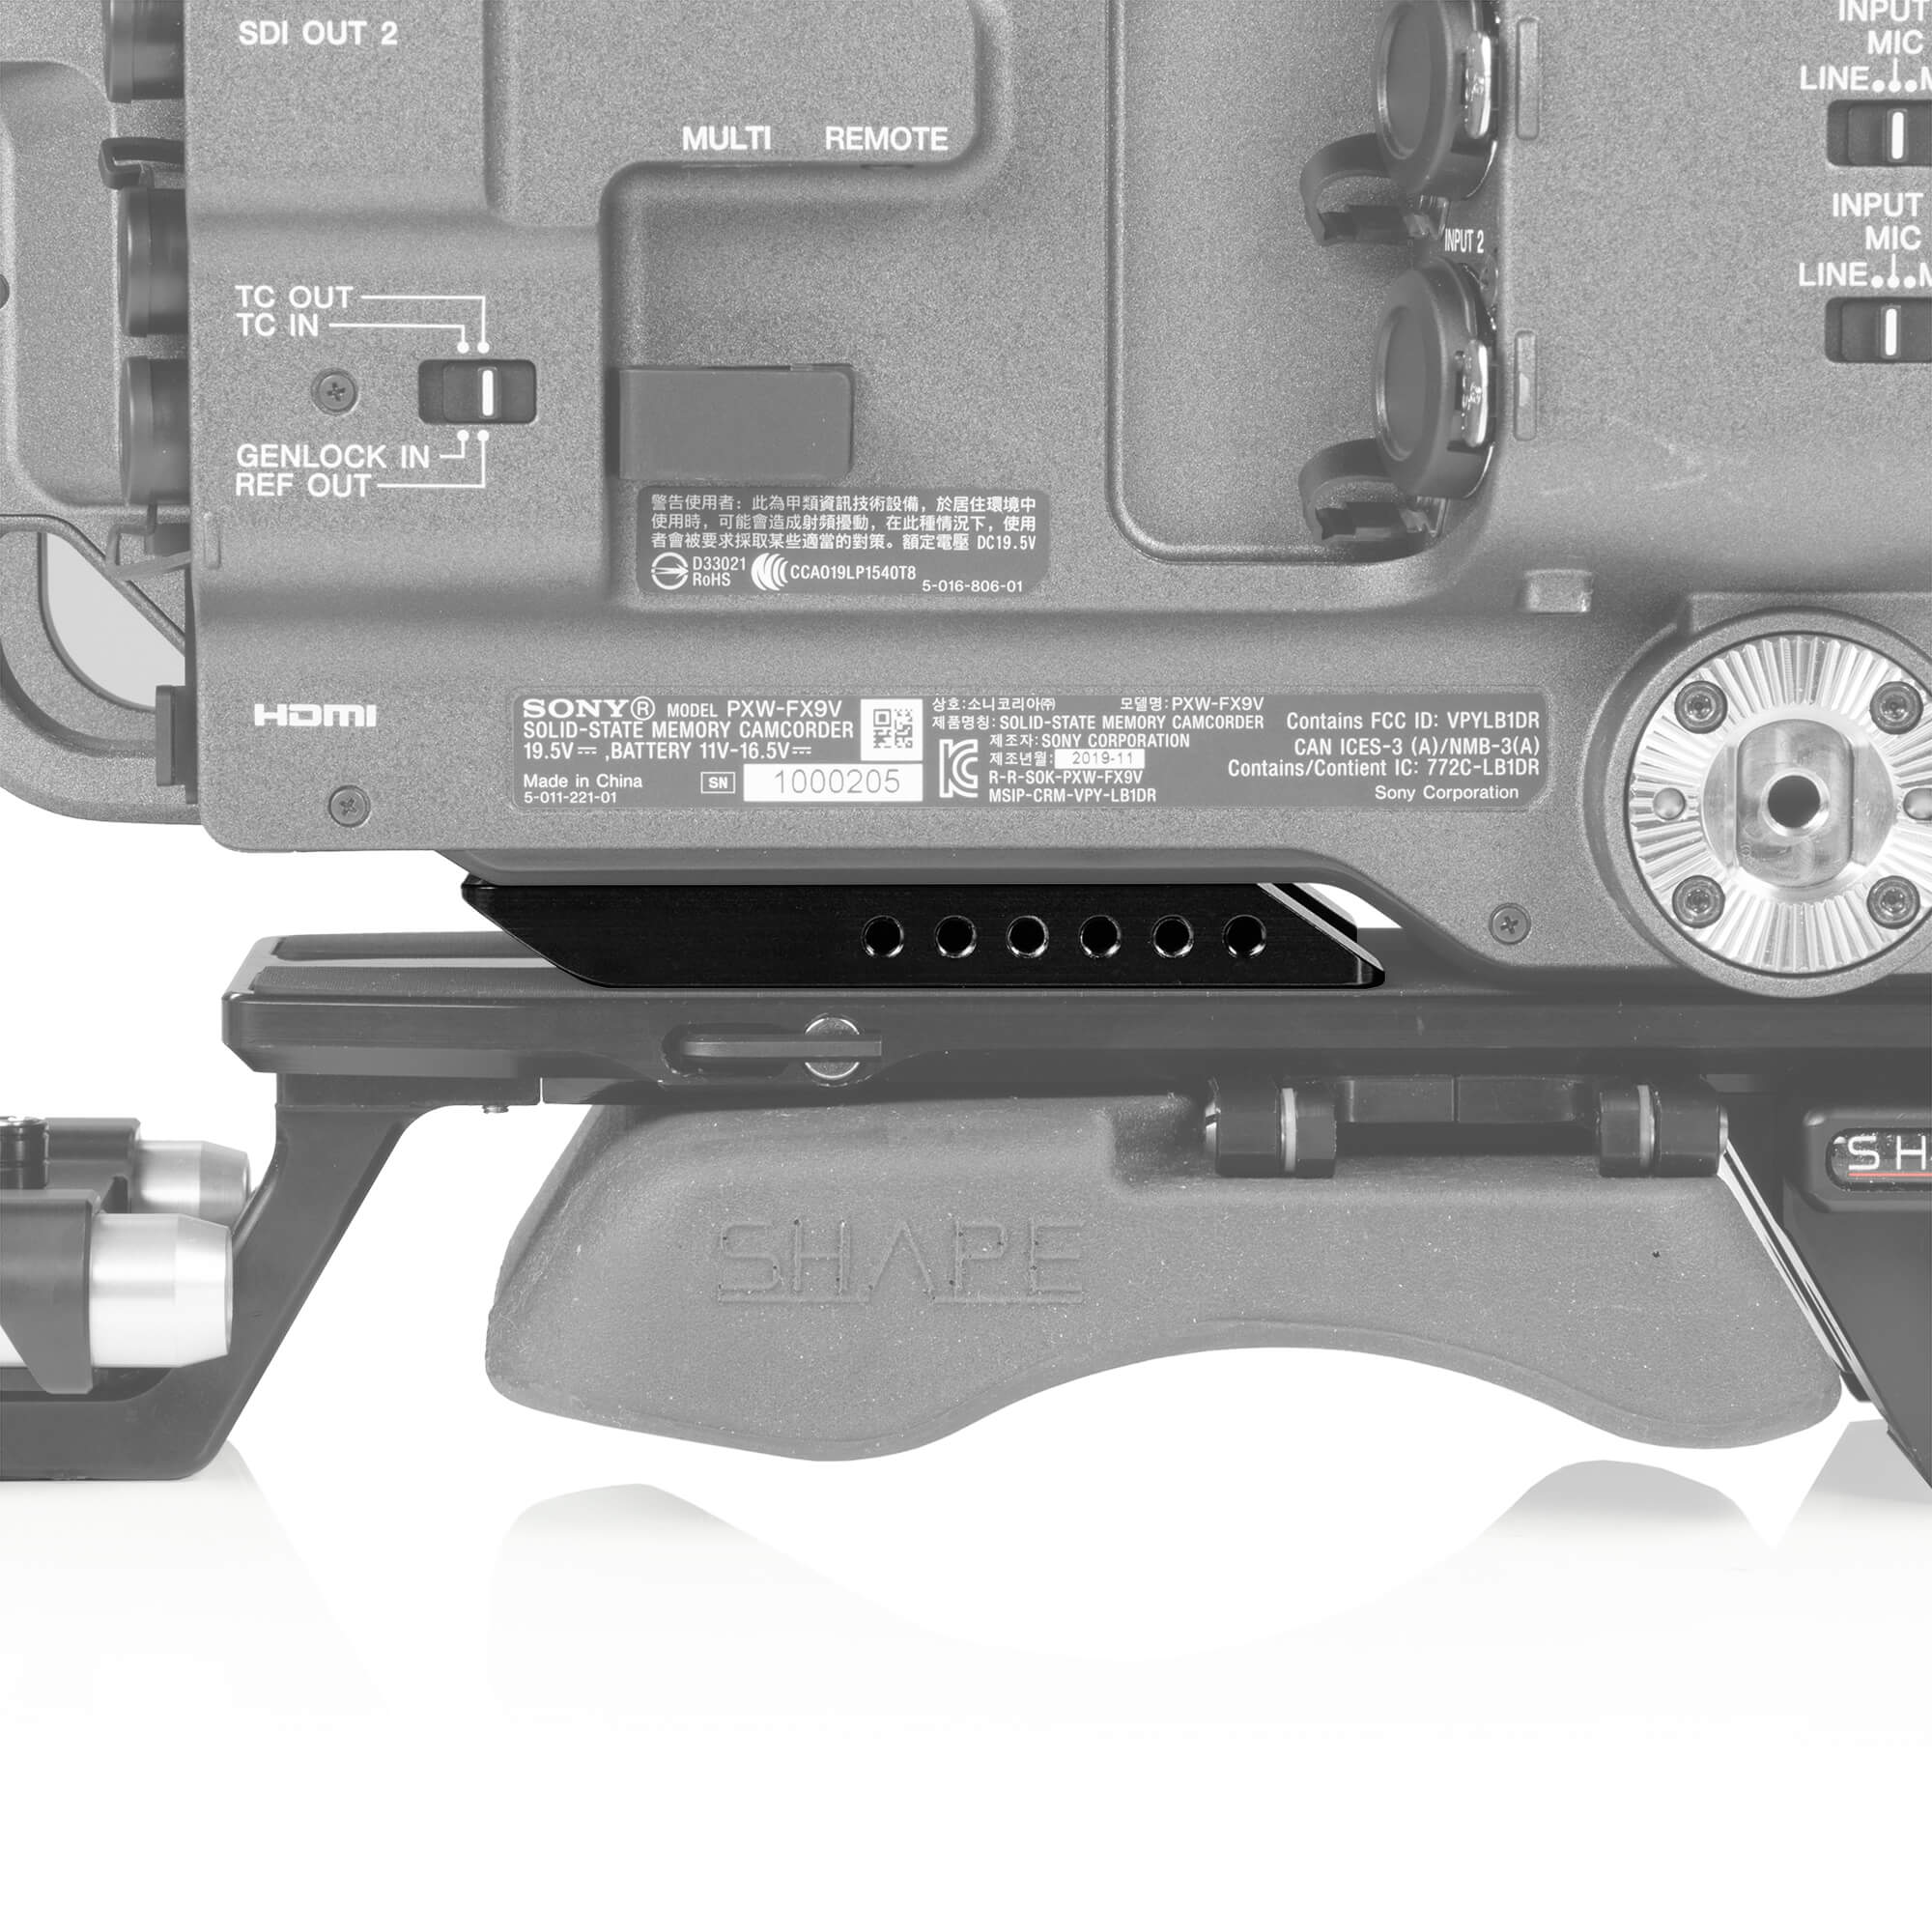 SHAPE Rear Insert Plate for Sony FX9